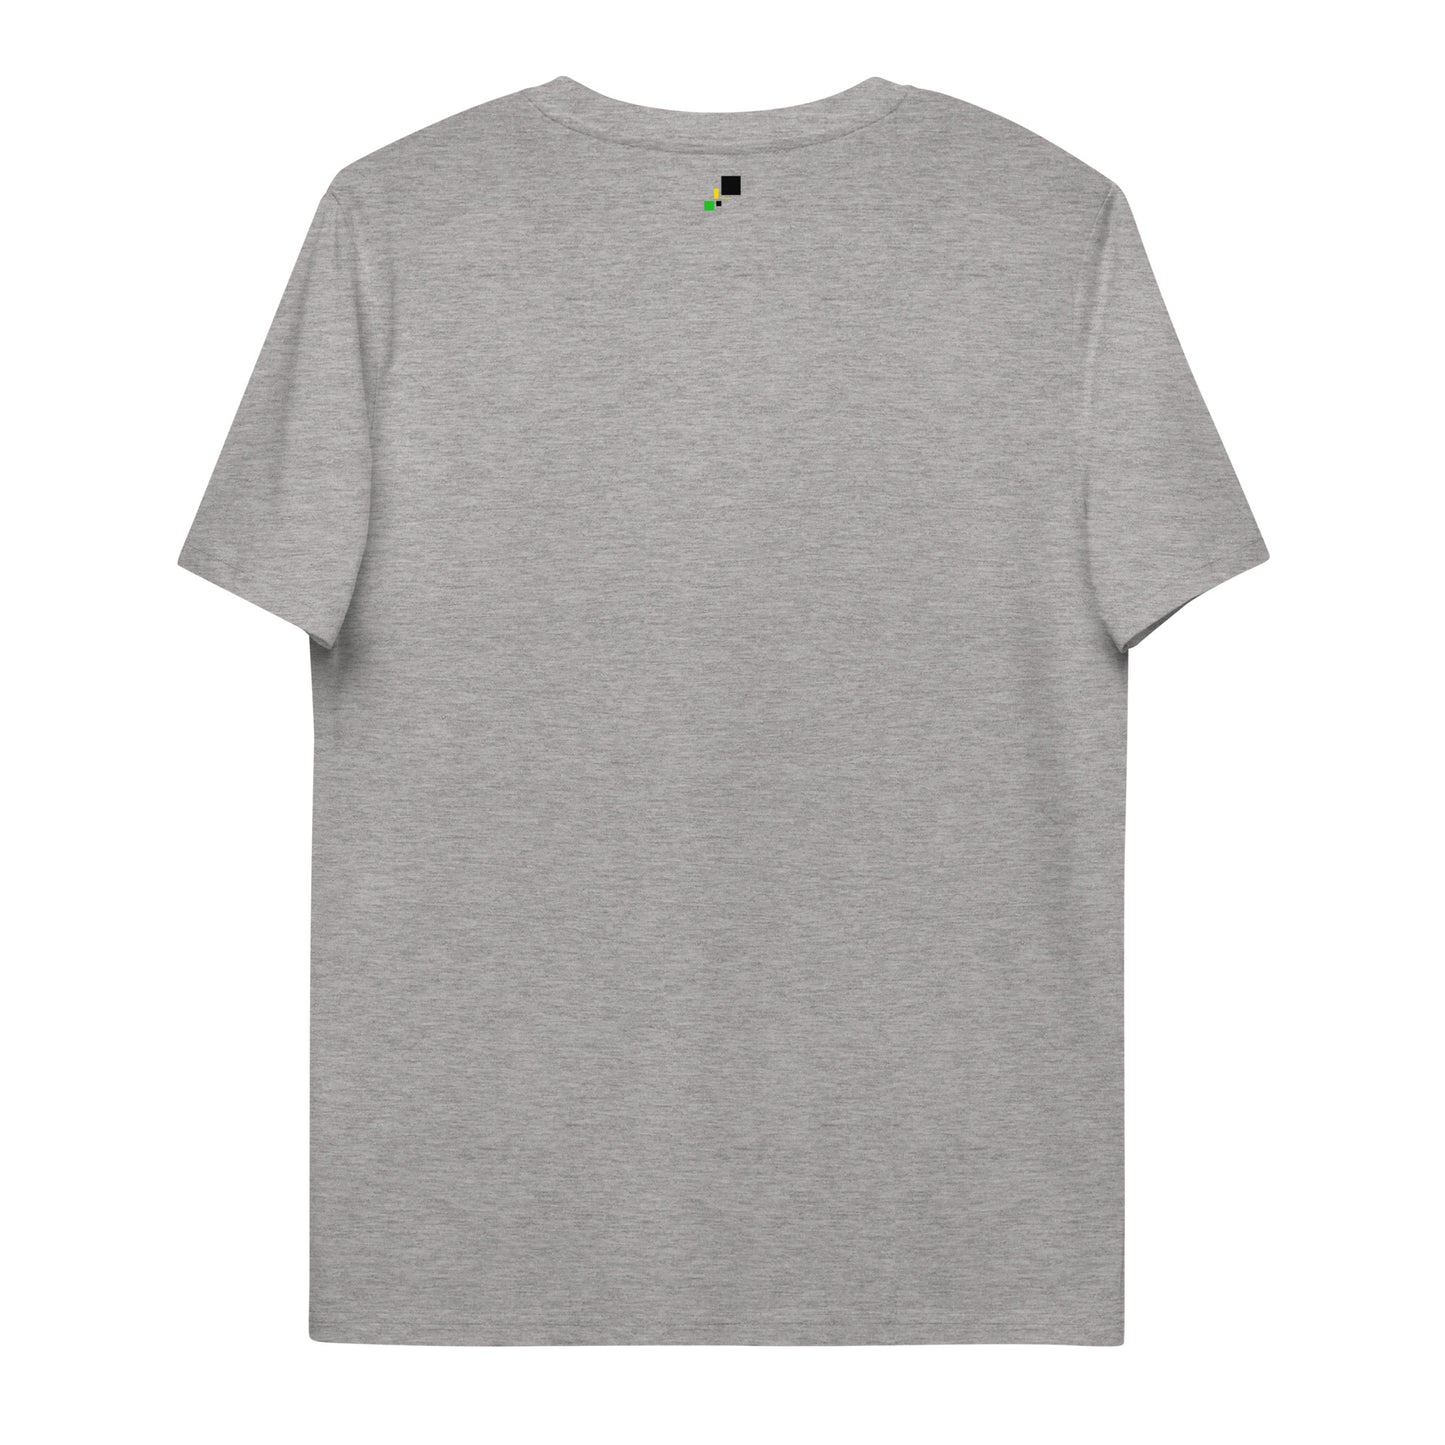 Johnson de Renovables low profile - Camiseta de algodón orgánico unisex